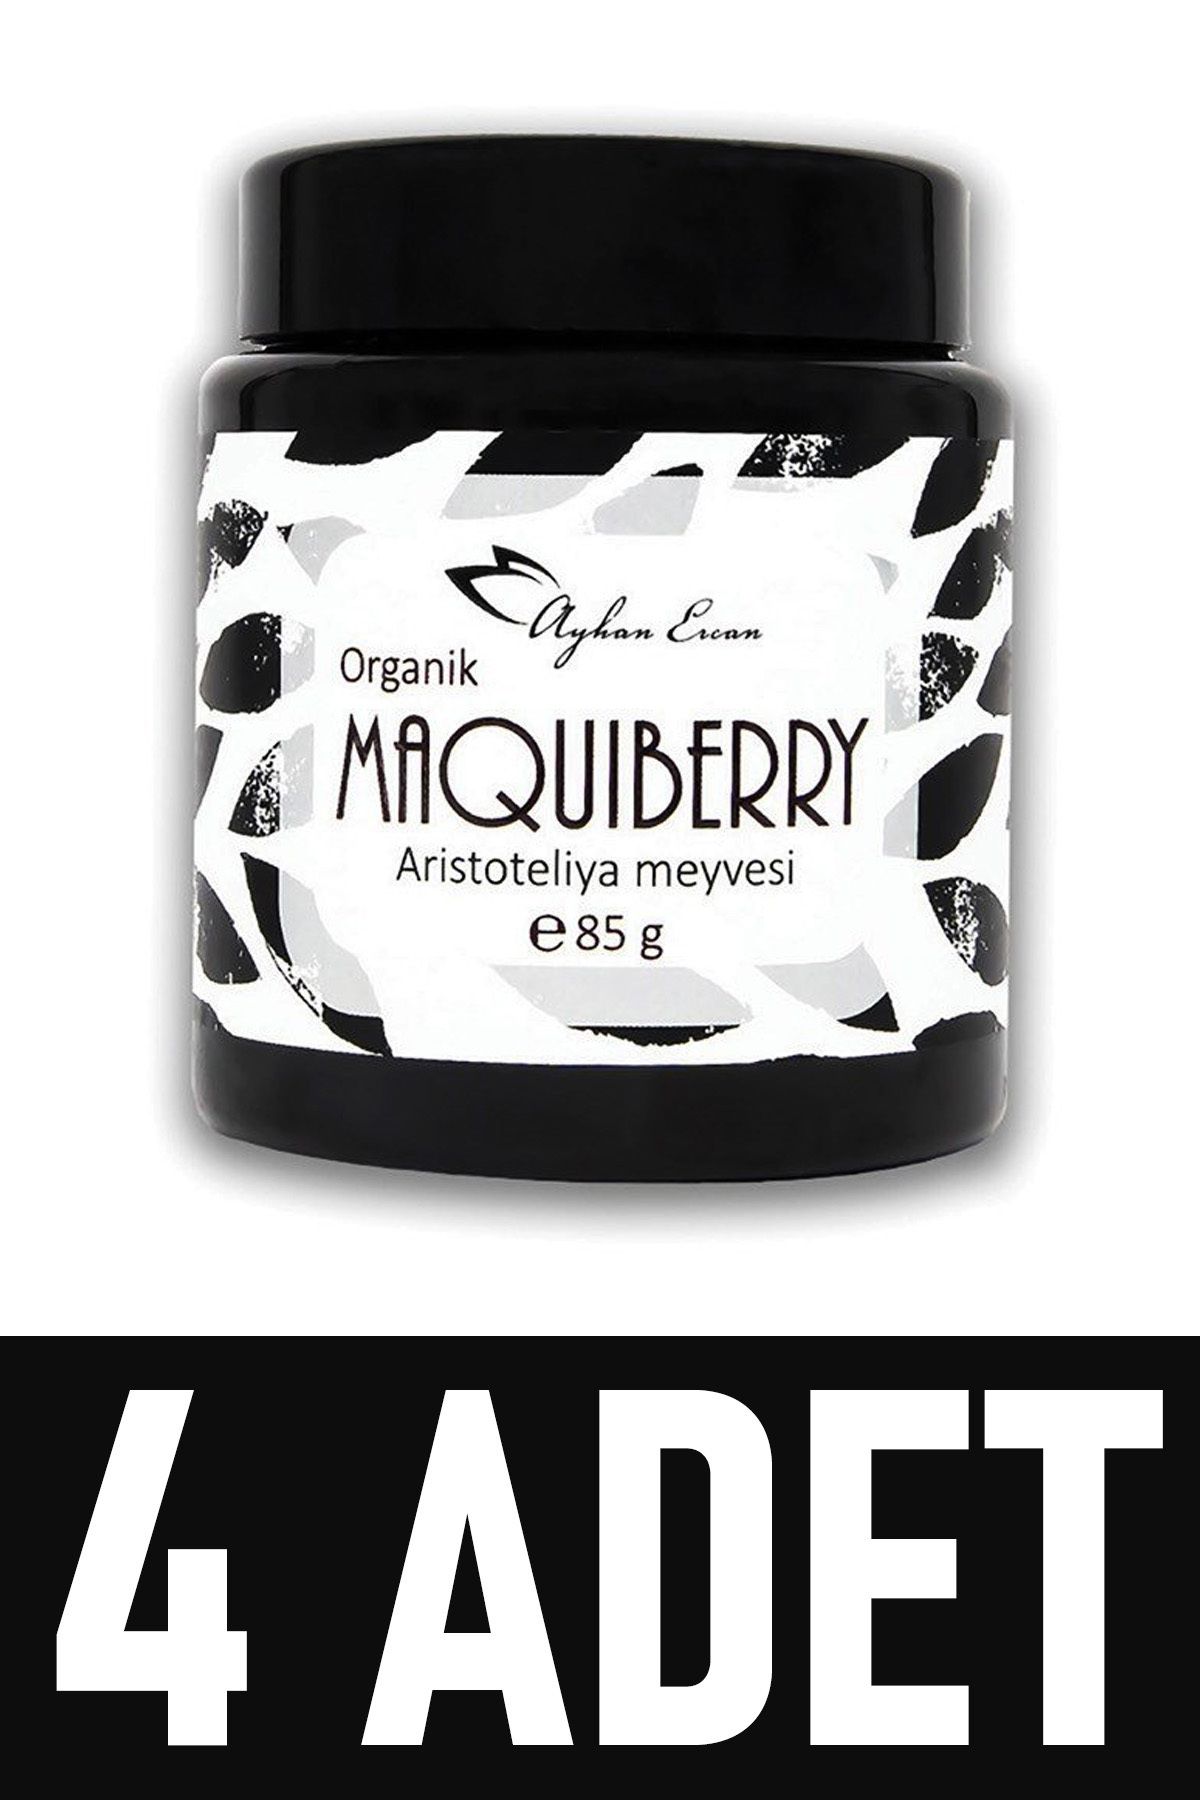 Ayhan Ercan Organik Maquiberry Meyvesi Tozu 85 gr (4 Adet)